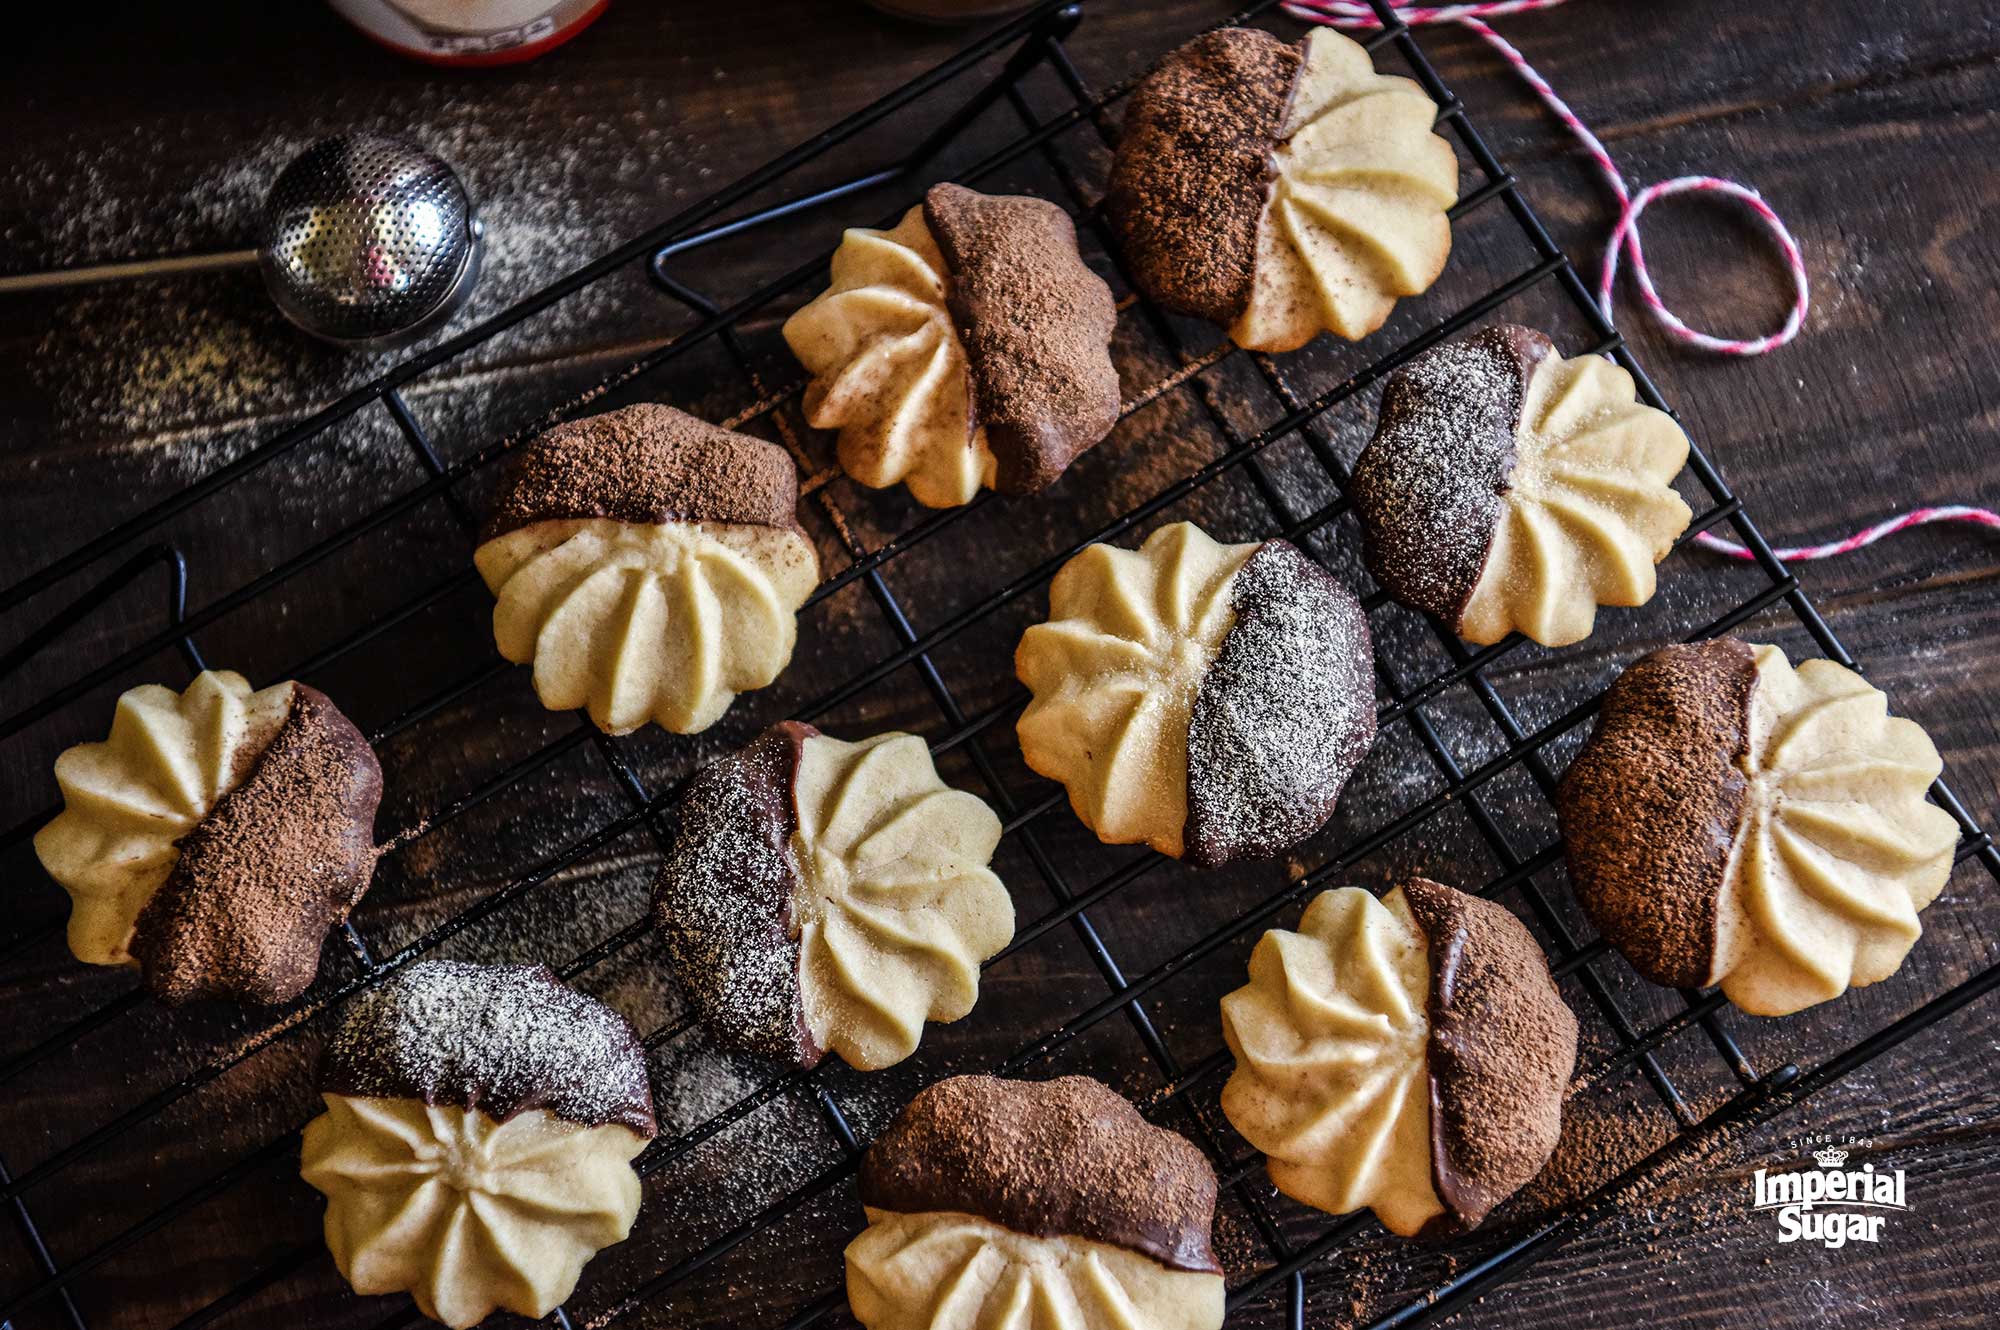 https://www.imperialsugar.com/sites/default/files/recipe/Malted-Shortbread-Chocolate-Dipped-Cookies-imperial.jpg